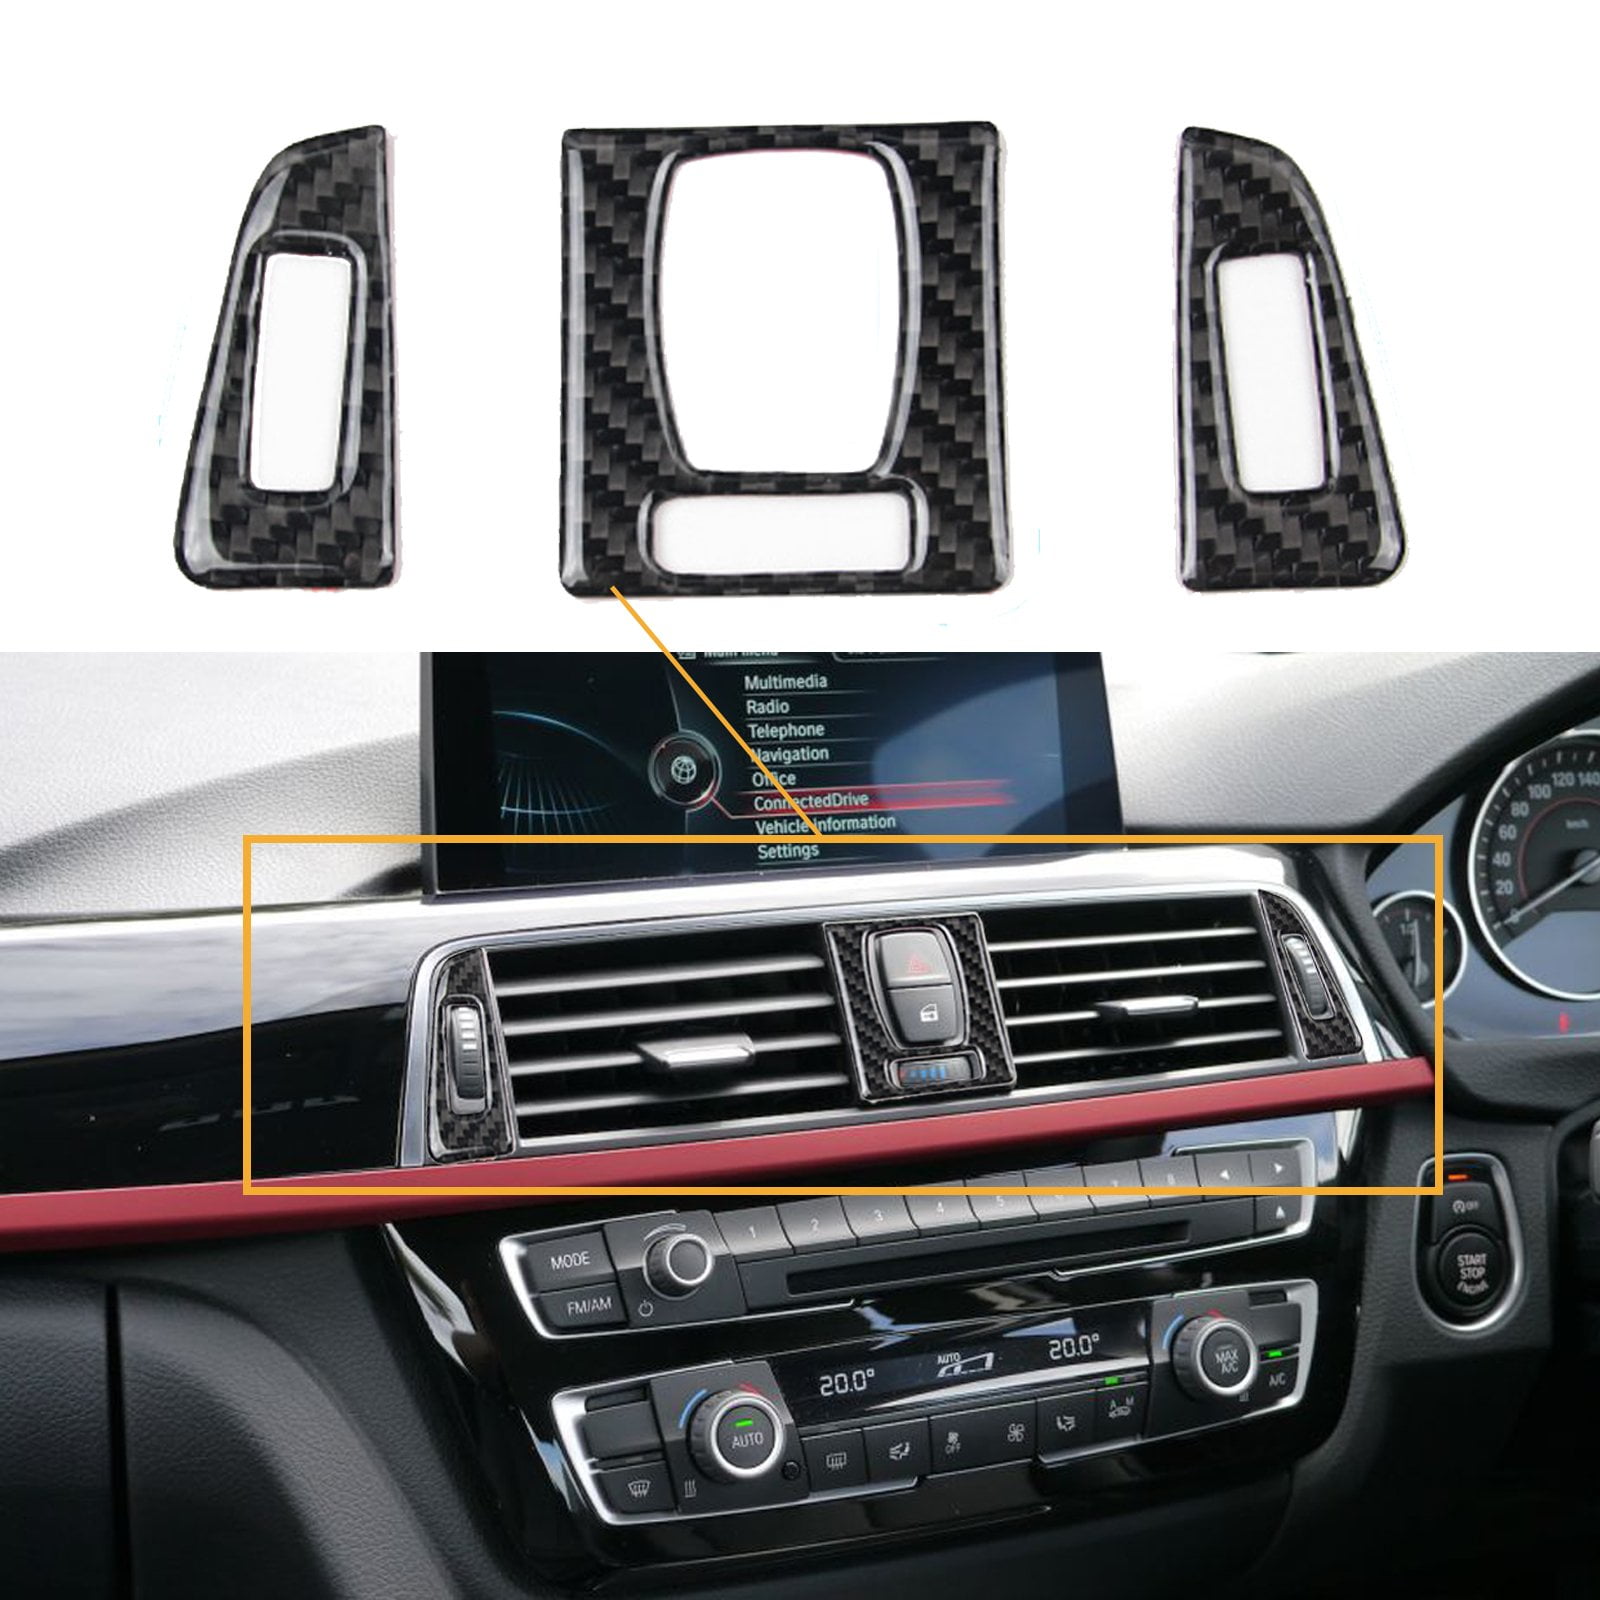 Car Interior Accessory For 3 4 Series F30 F31 F32 F36 2014-2018 ABS Seat Belt Cover Trim Matt Silver